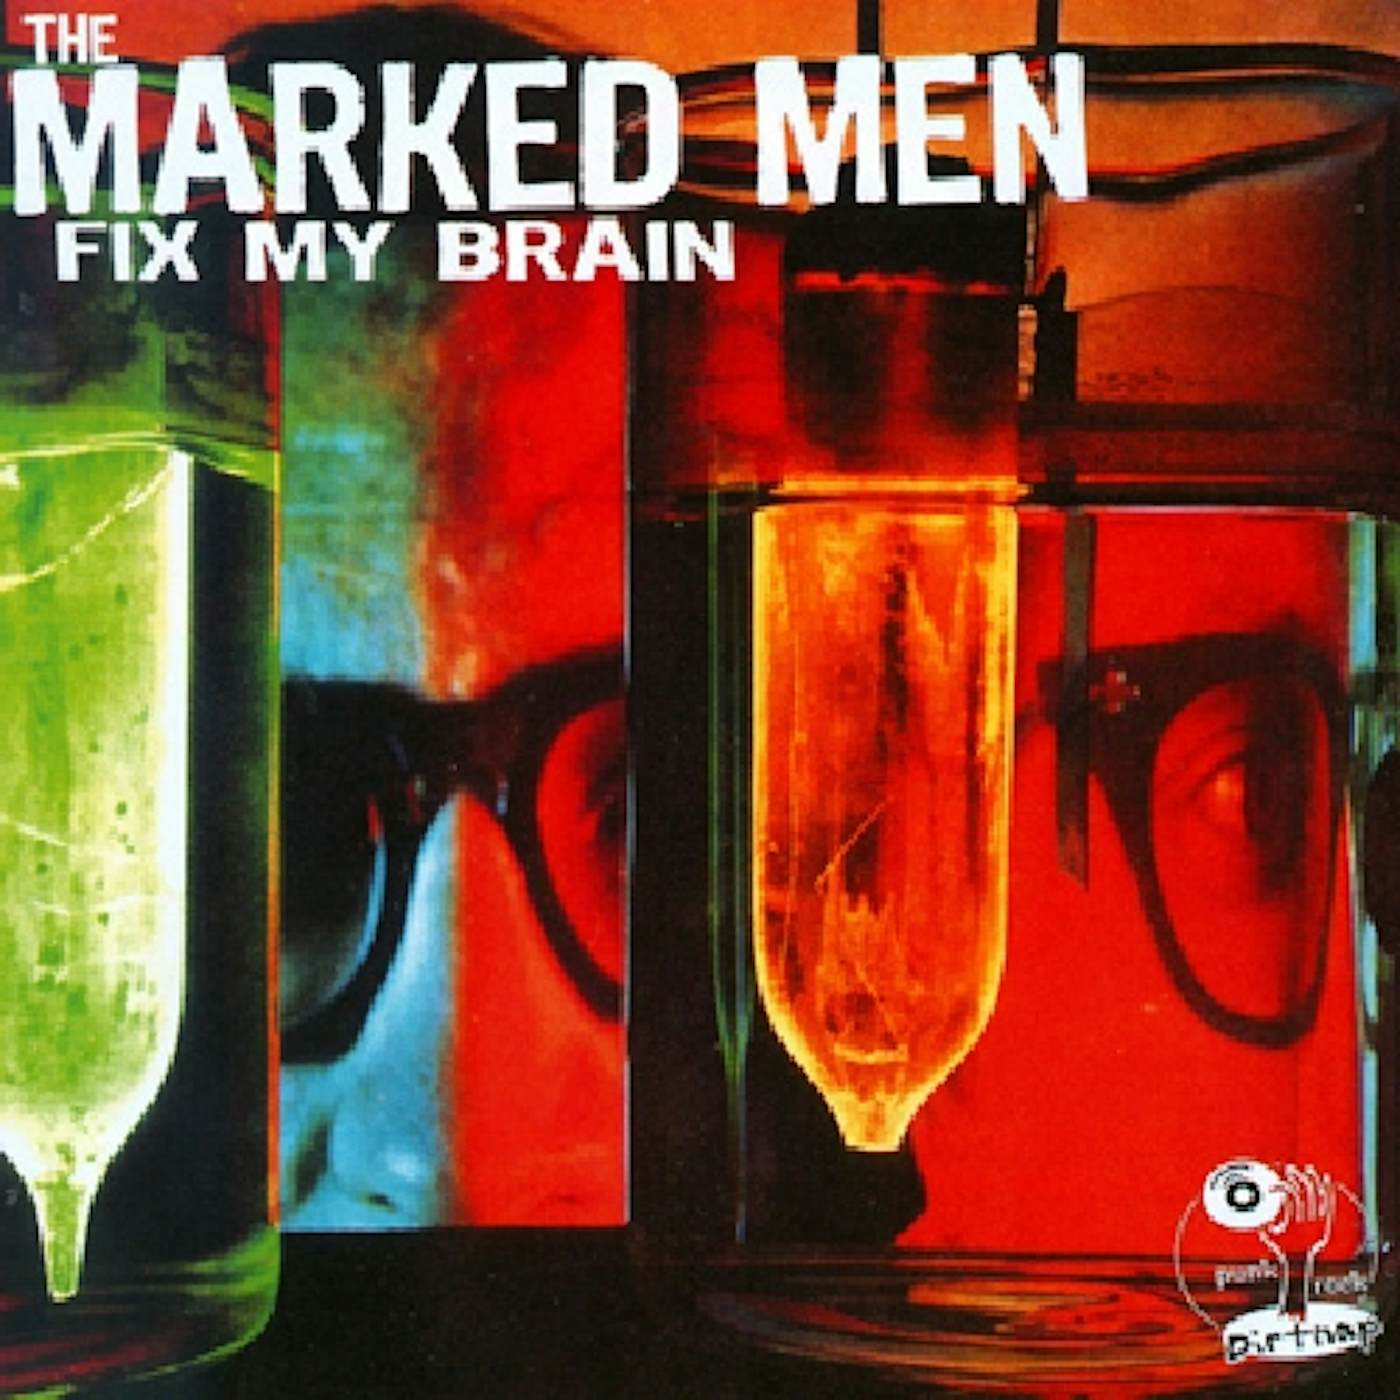 Marked Men FIX MY BRAIN CD